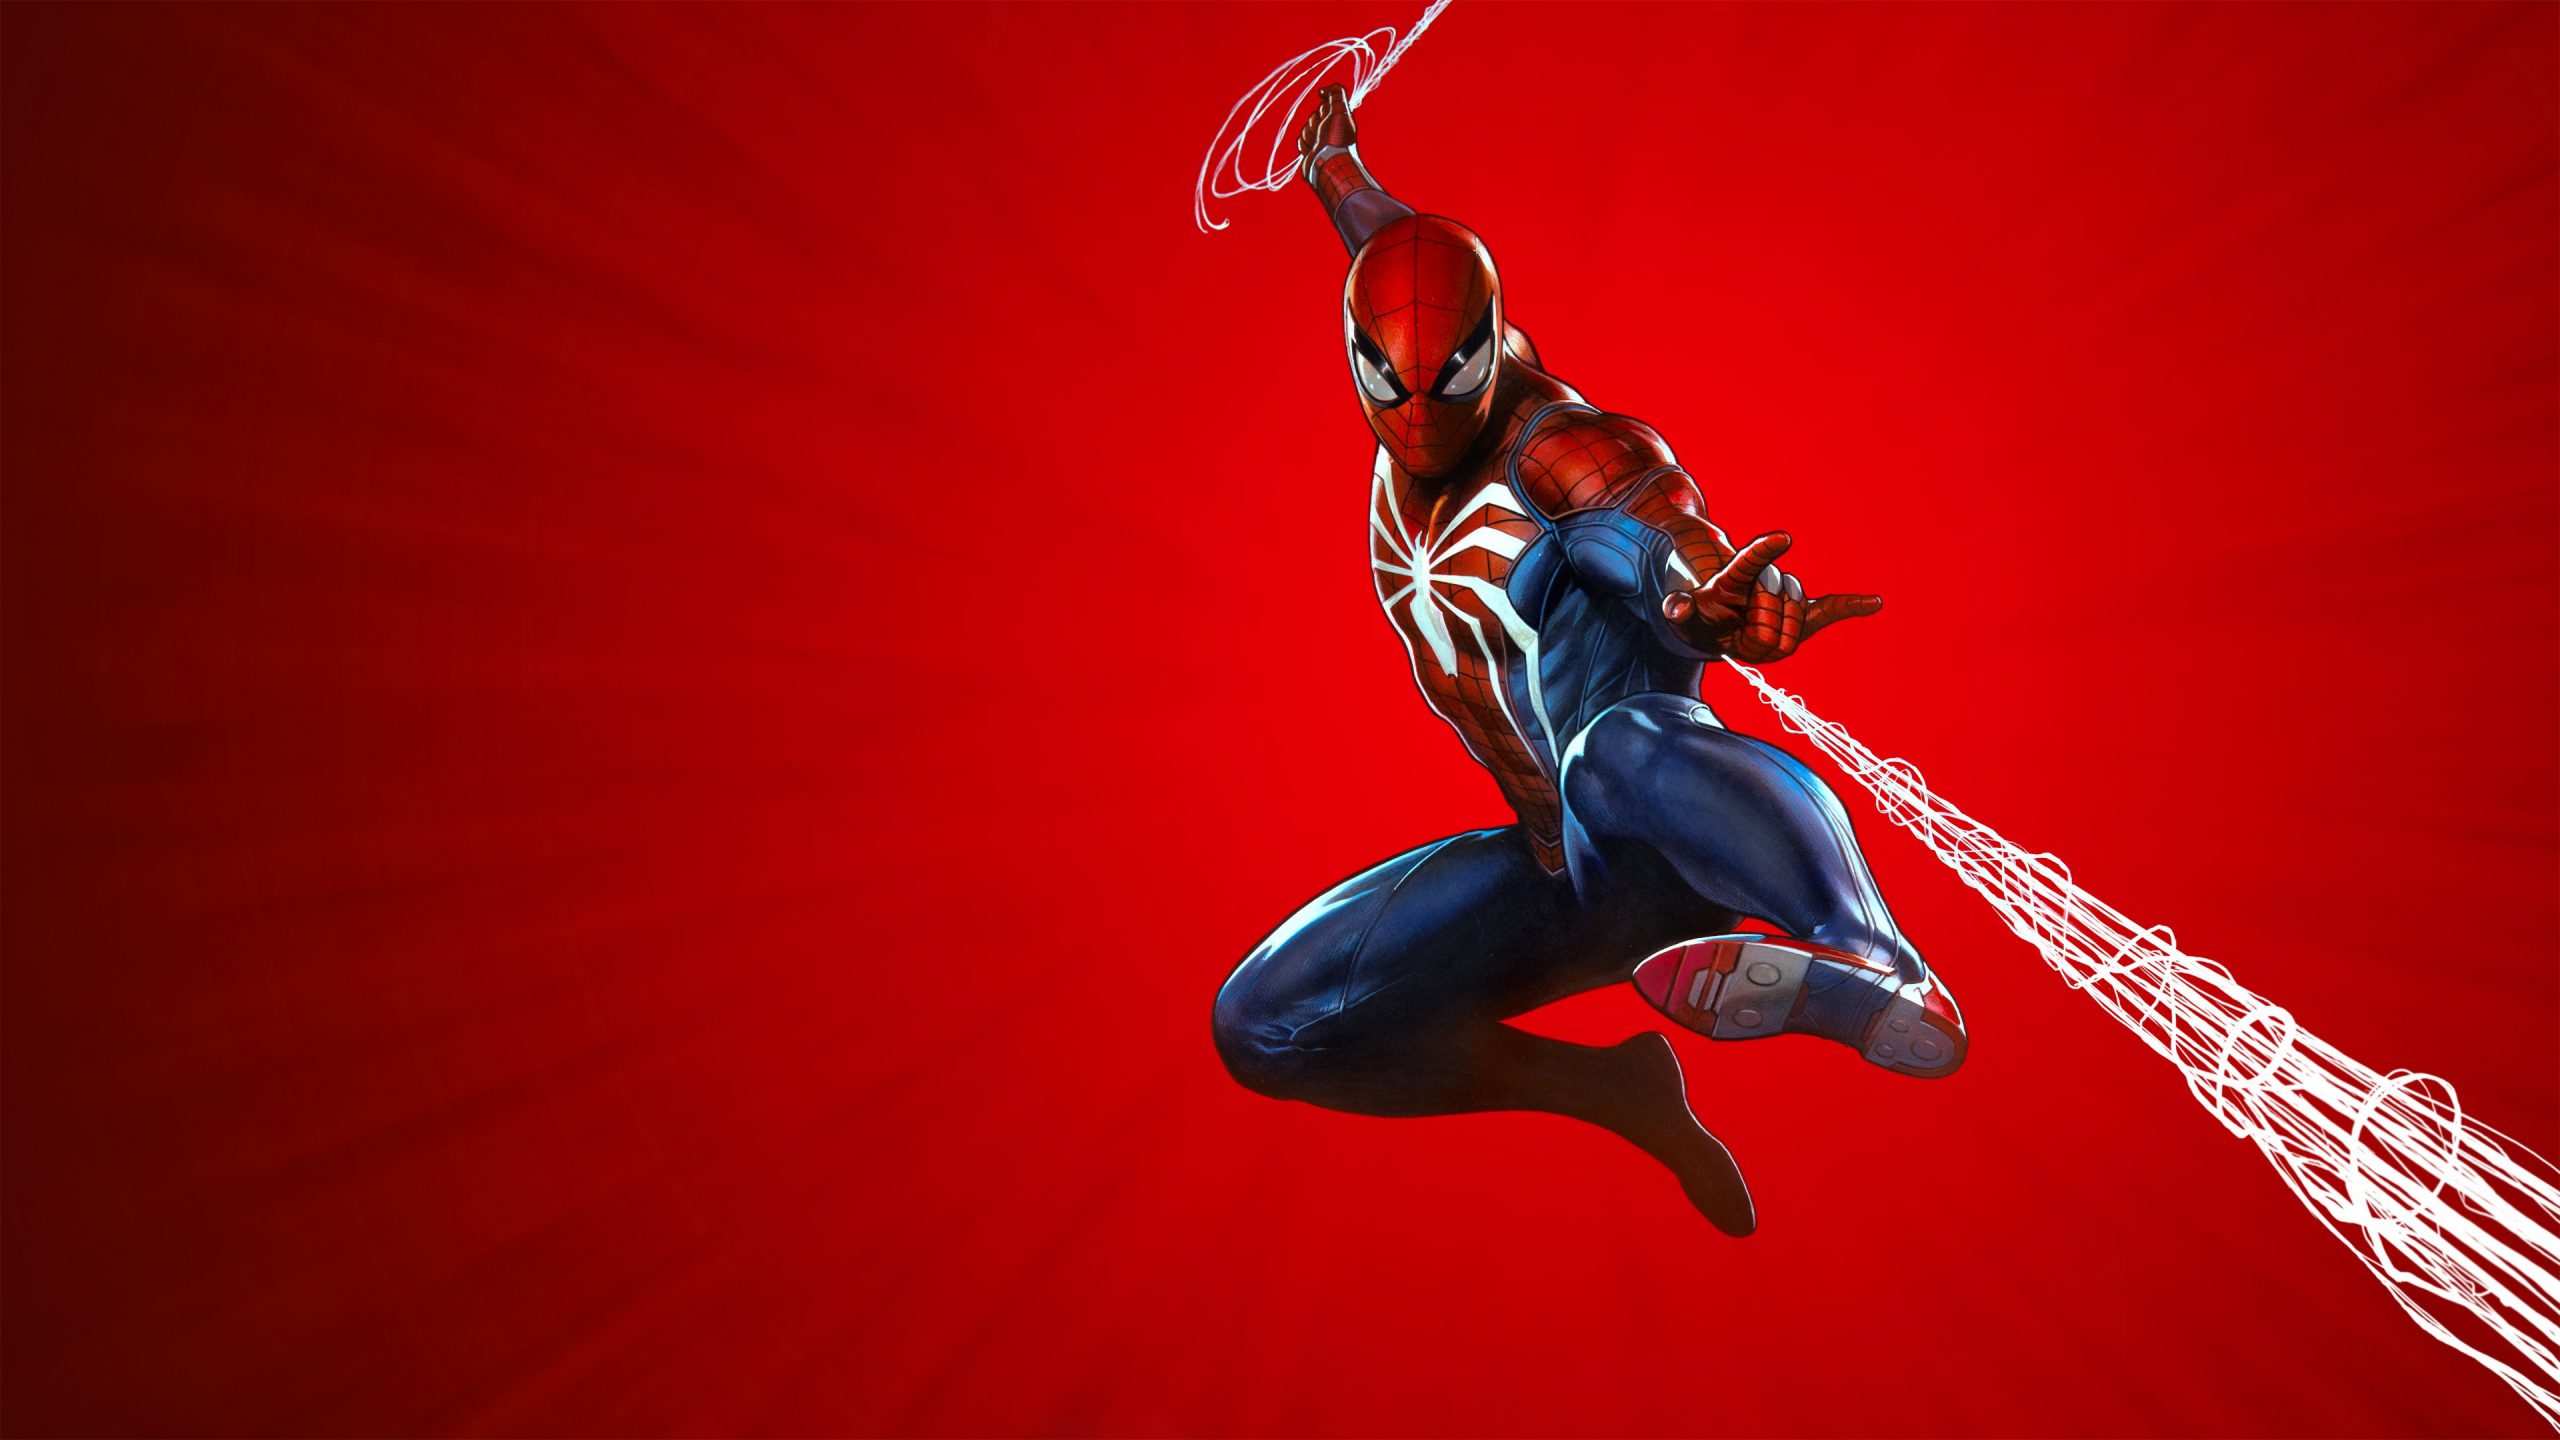 Spider-Man 4K Wallpaper - KoLPaPer - Awesome Free HD Wallpapers